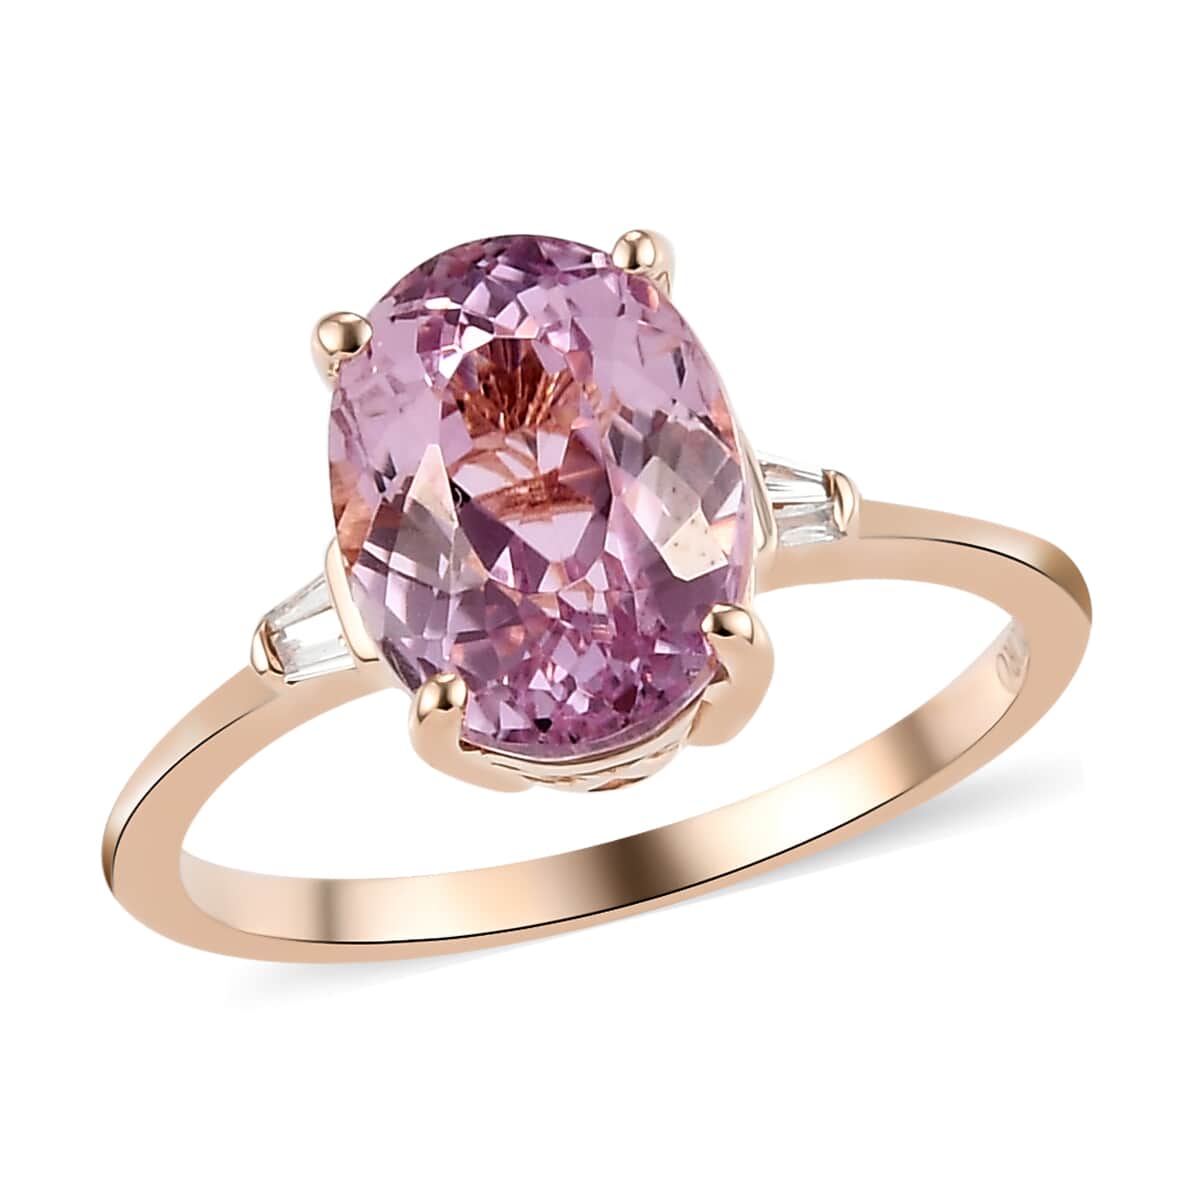 LUXORO 10K Rose Gold Premium Kunzite and Diamond Accent Ring (Size 10.0) 2 Grams 3.60 ctw image number 0